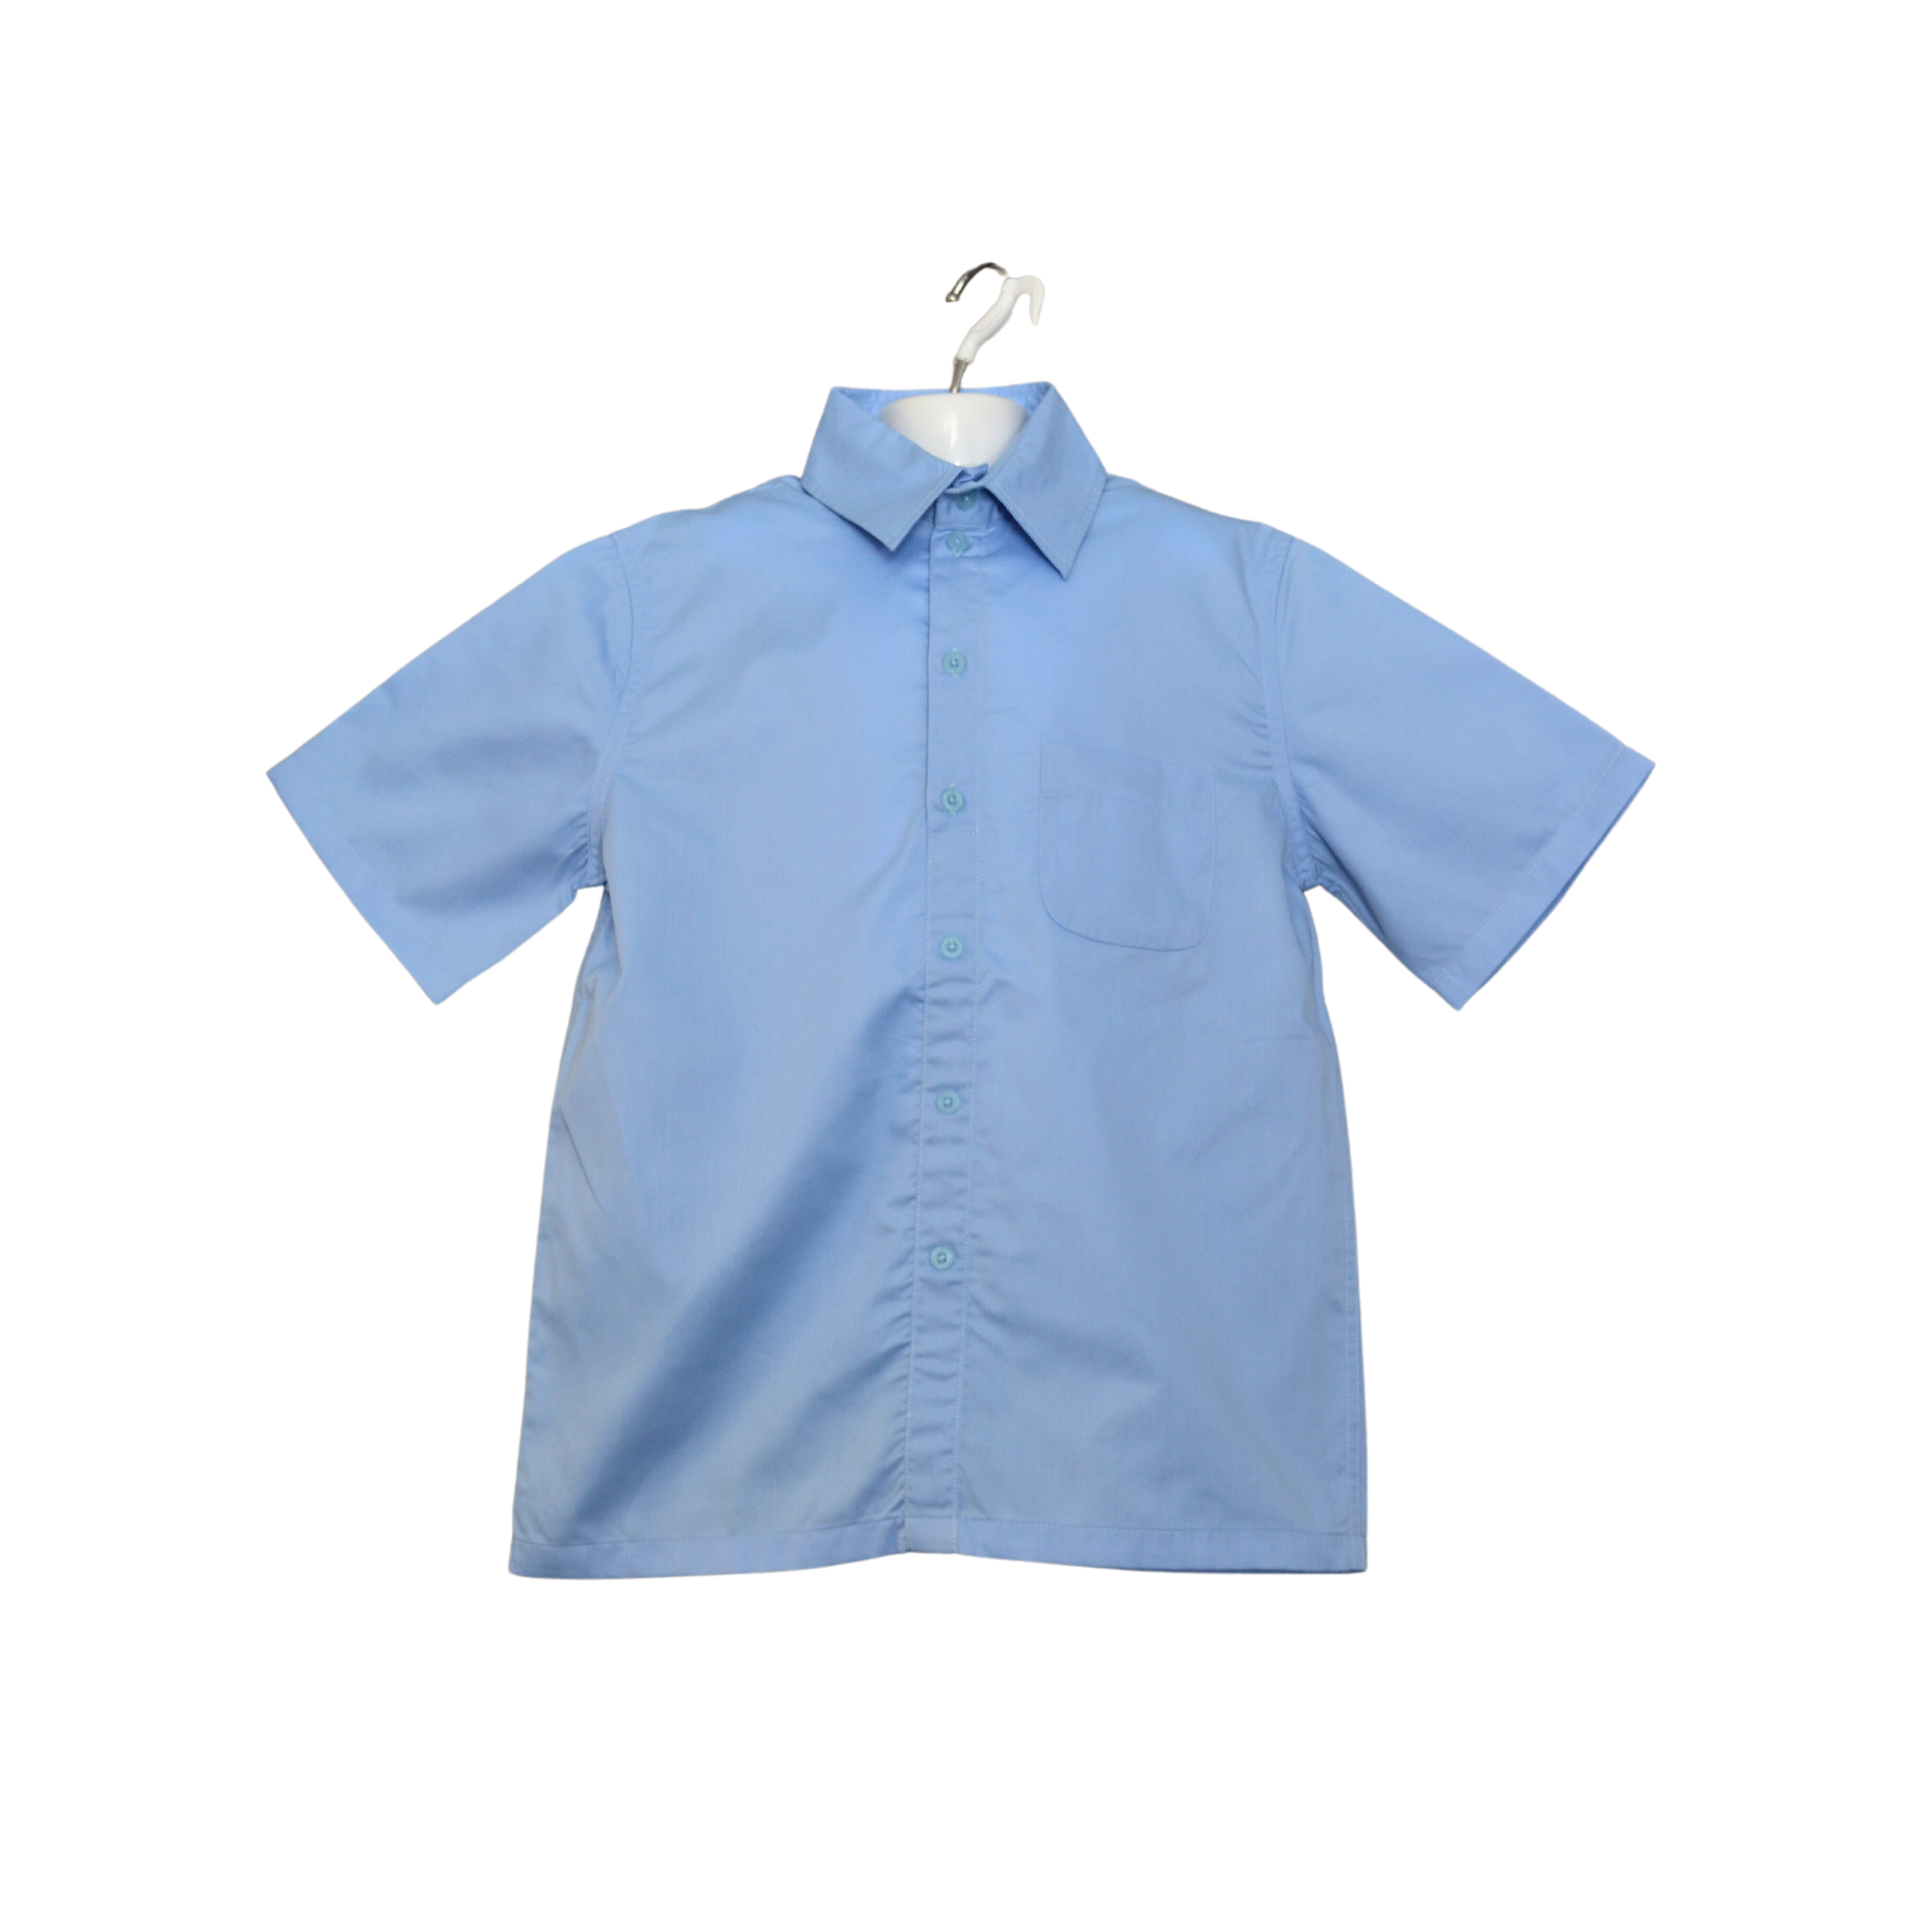 Spectra Sensory Clothing - Autism Friendly School Shirt - Short Sleeve Blue Shirt CLEARANCE